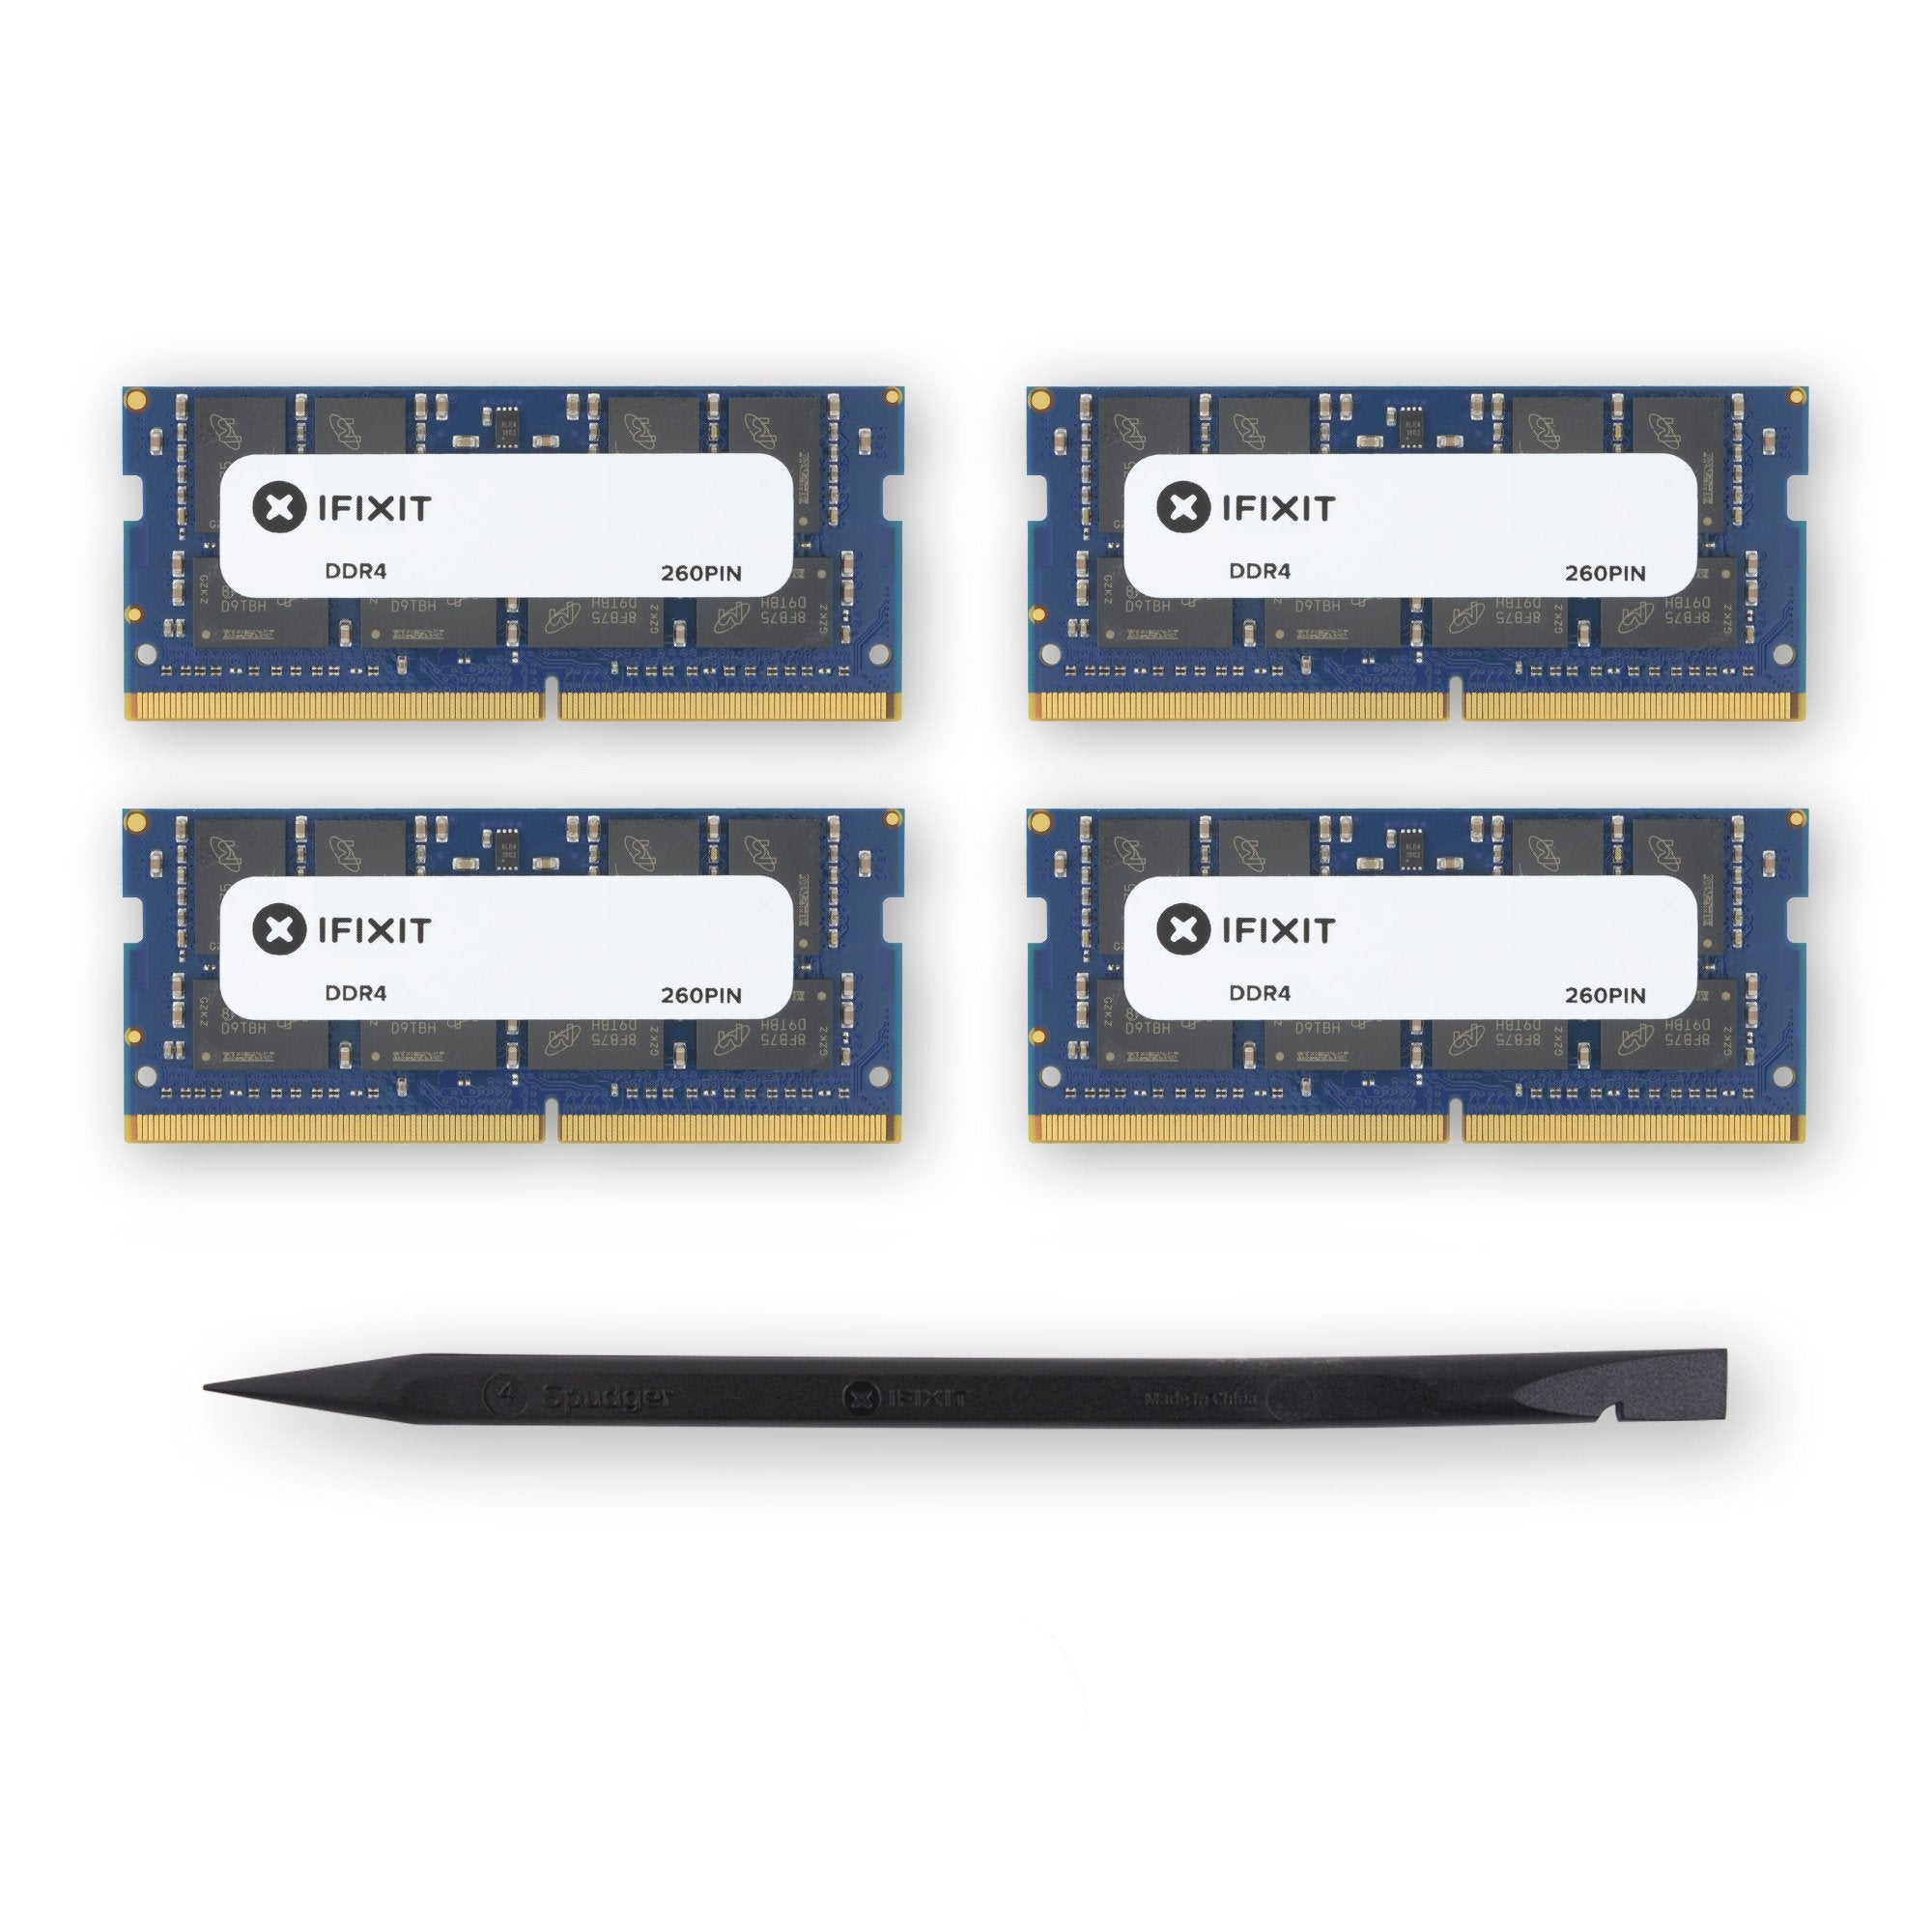 iMac Intel 27" EMC 3070 (Mid 2017, 5K Display) Memory Maxxer RAM Upgrade Kit New